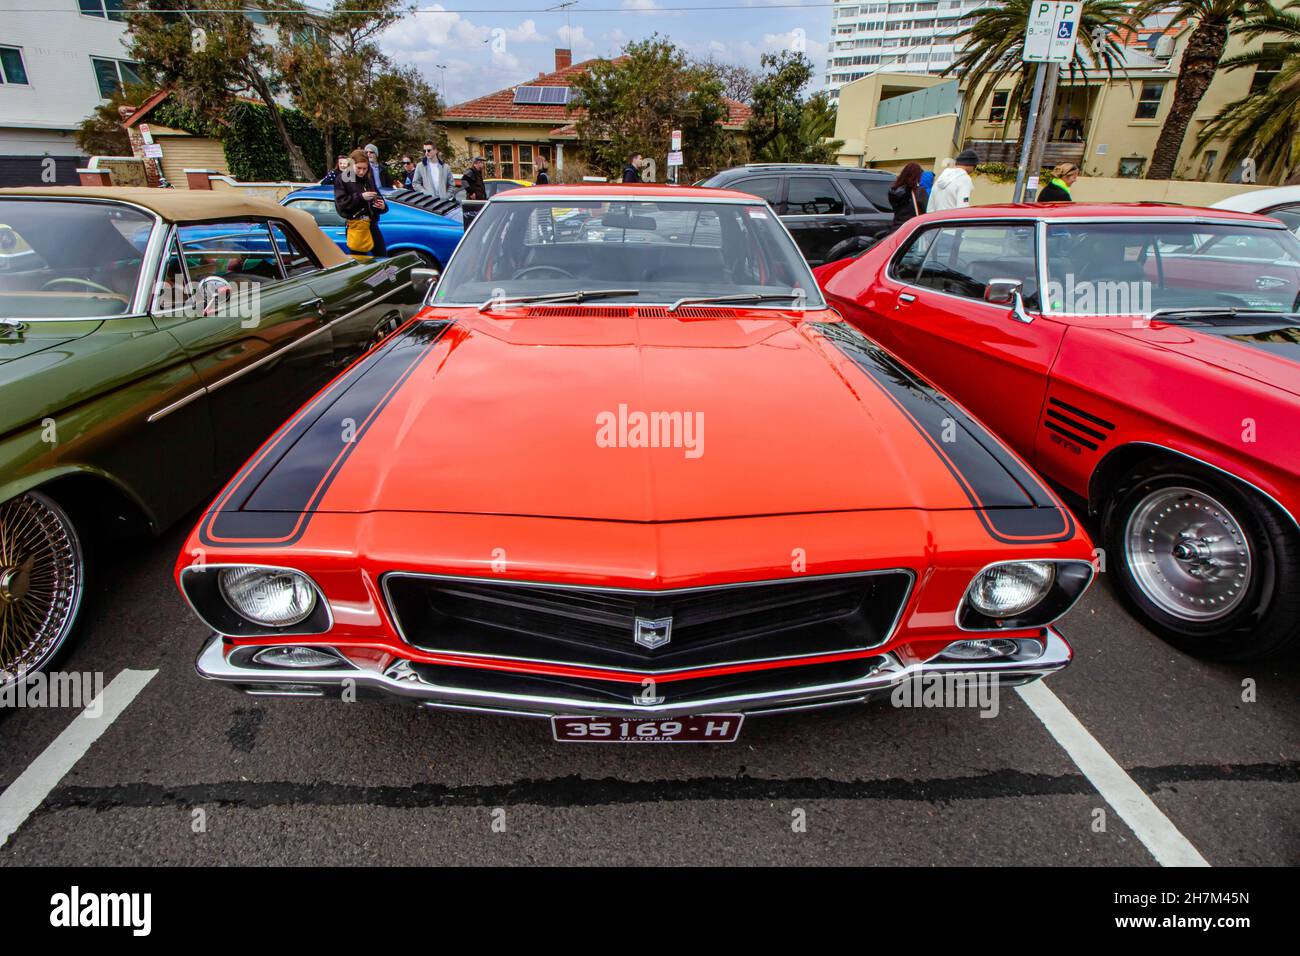 Holden coche clásico, rojo o naranja. Melbourne Car show Día del Padre. St Kilda, Victoria, Australia Foto de stock